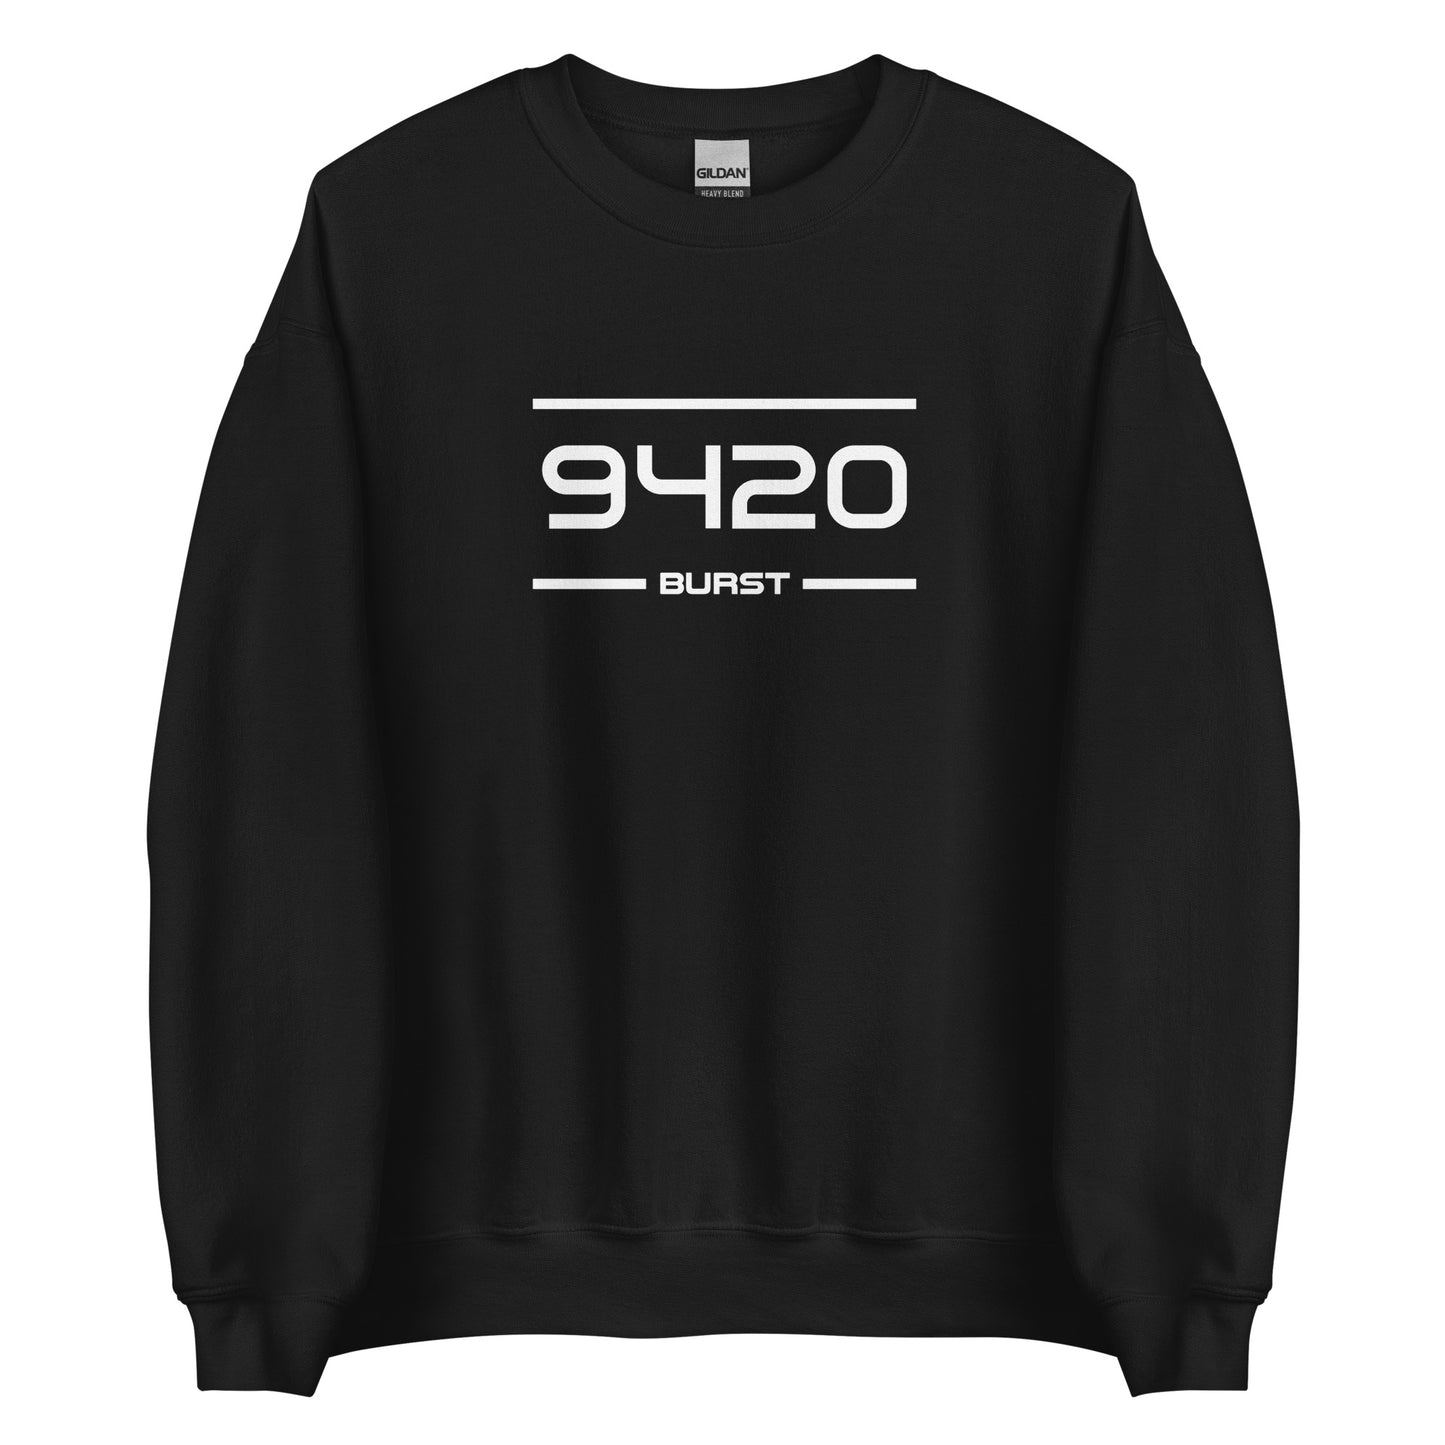 Sweater - 9420 - Burst (M/V)